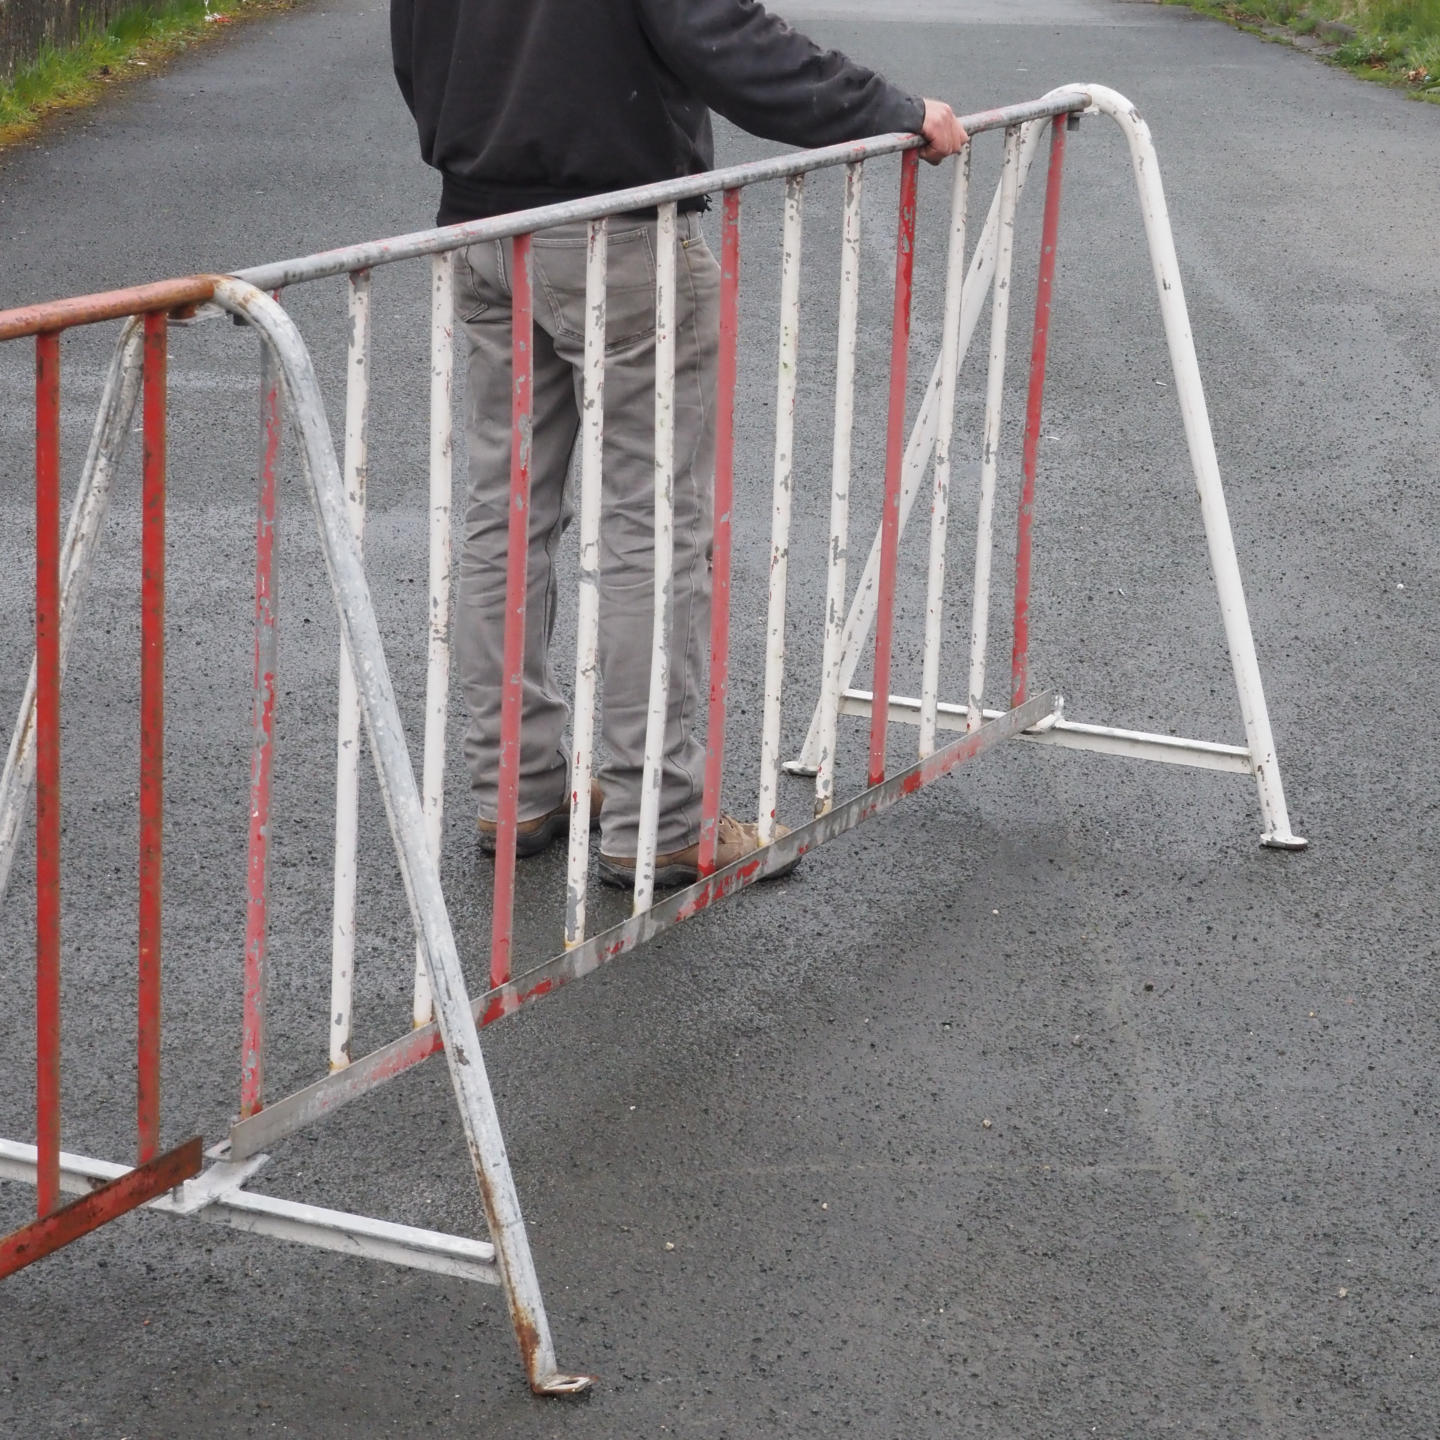 Interlocking steel barriers (L. 1000 cm)